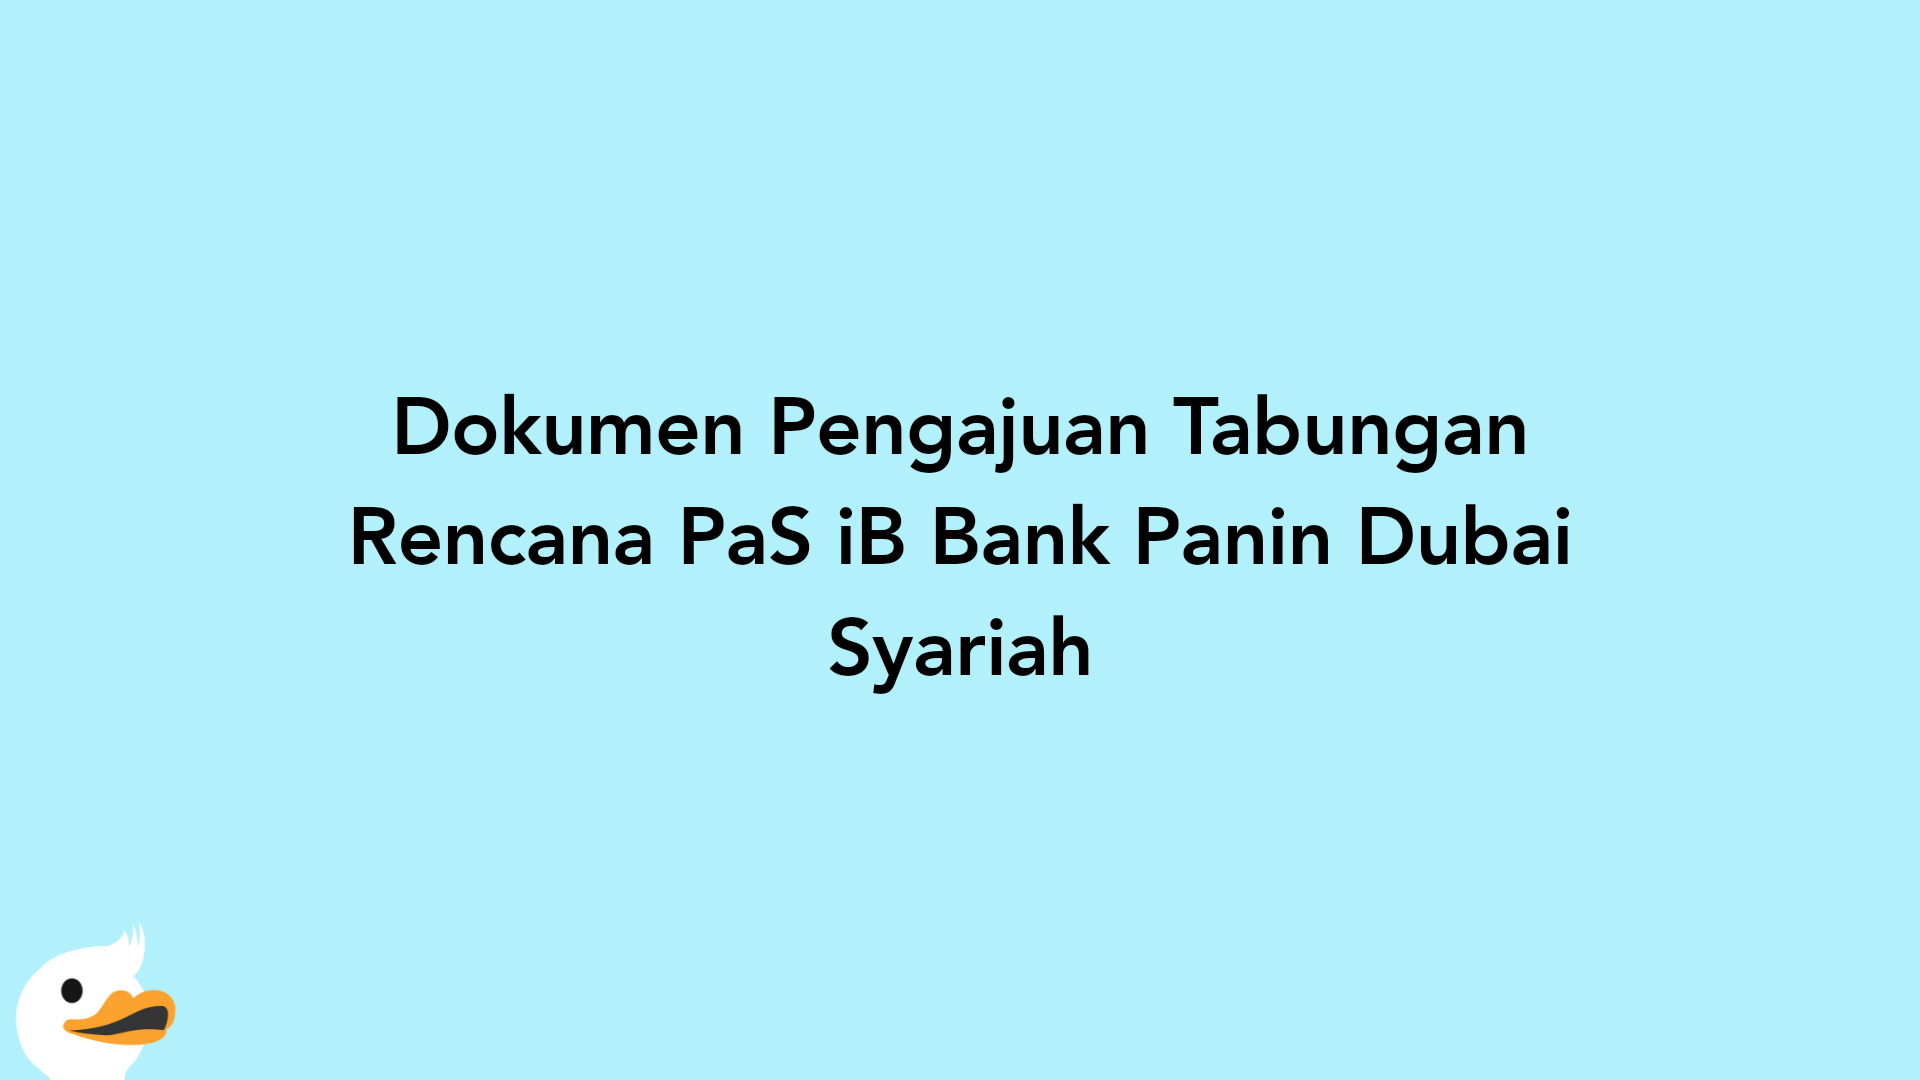 Dokumen Pengajuan Tabungan Rencana PaS iB Bank Panin Dubai Syariah